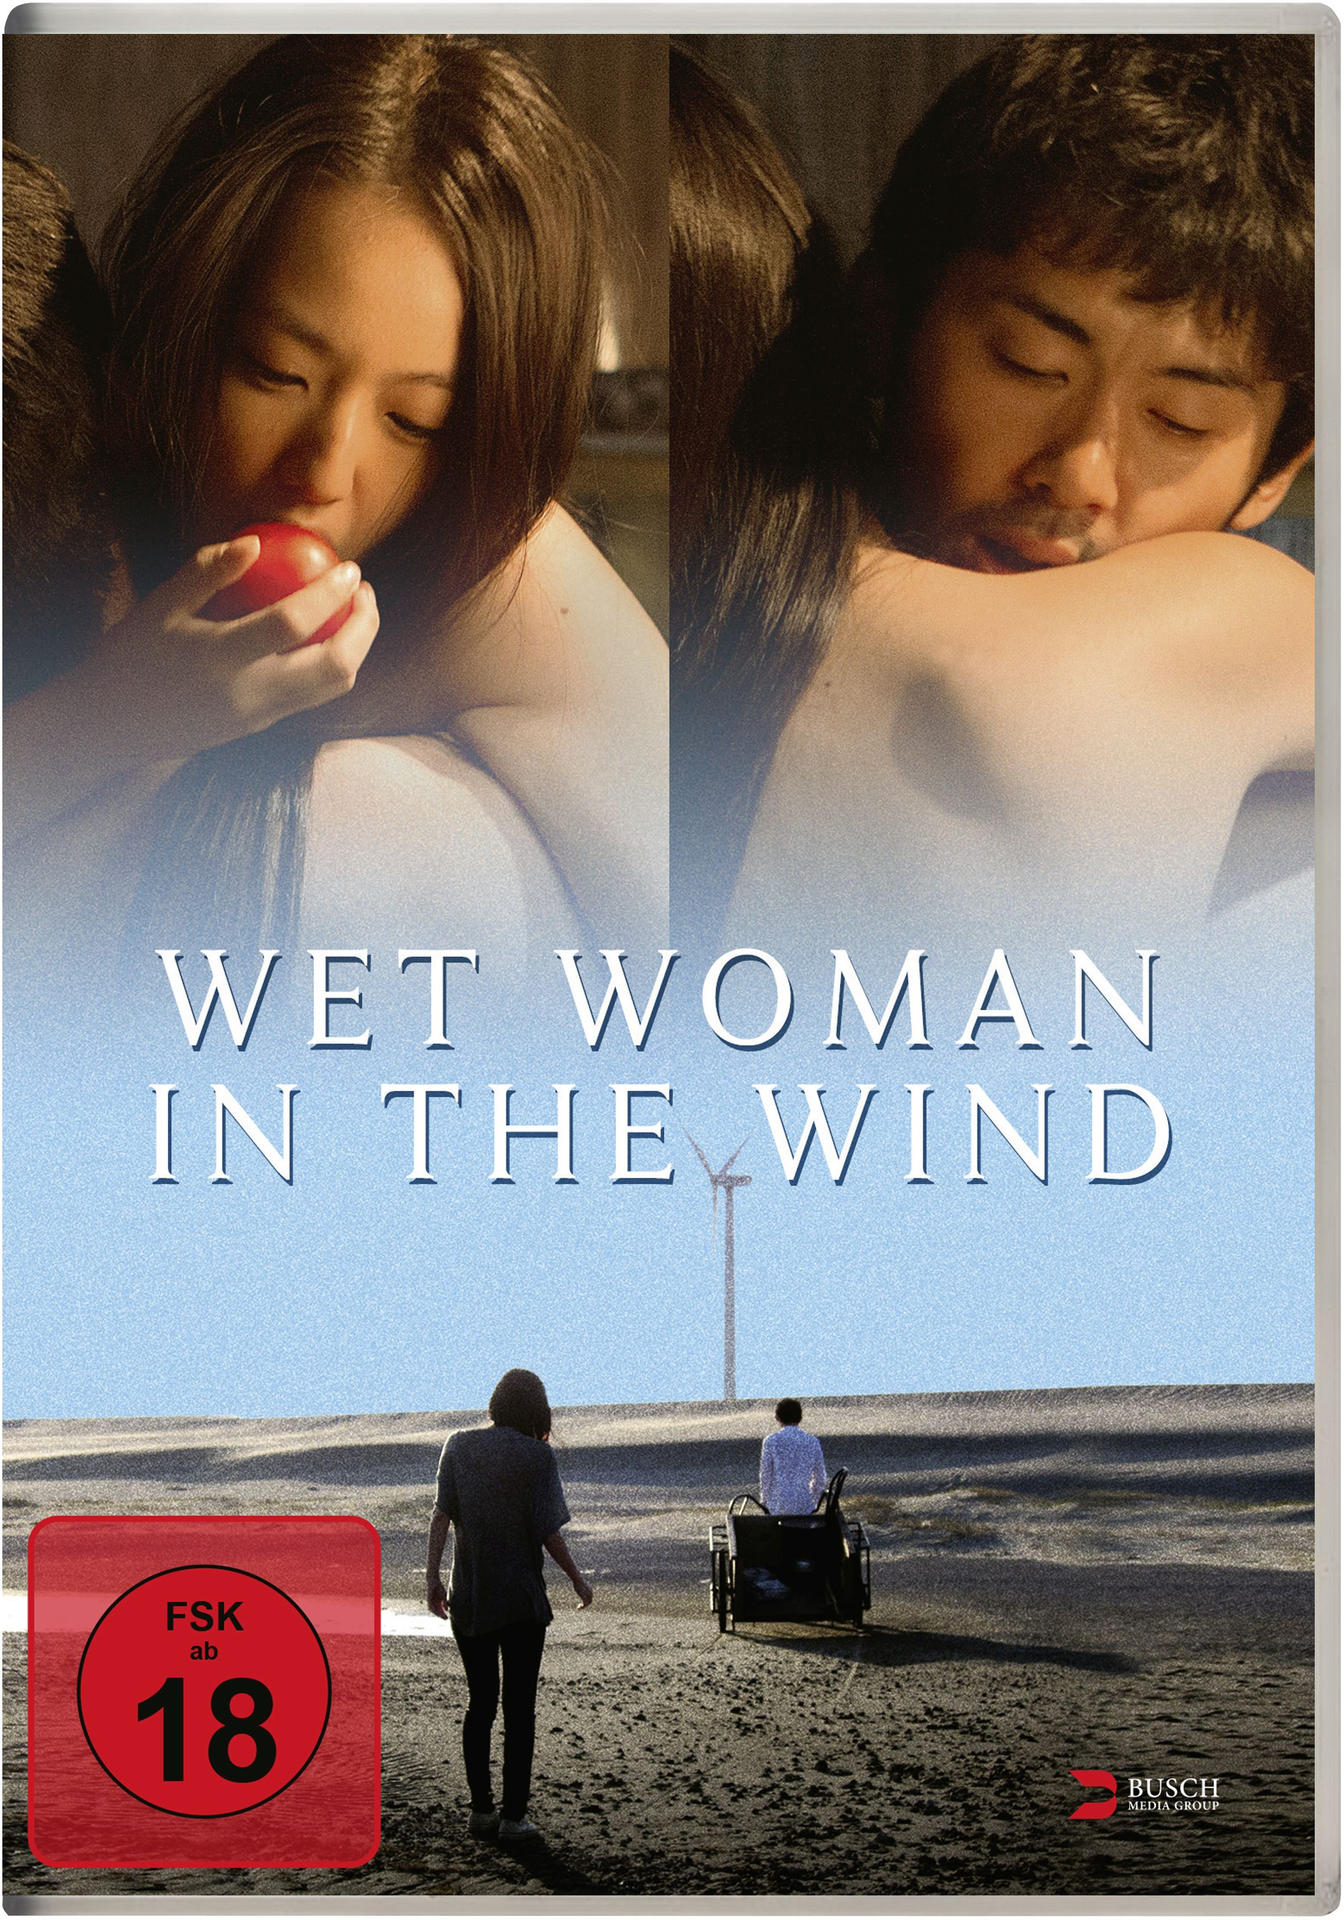 Woman Wind Wet in DVD the